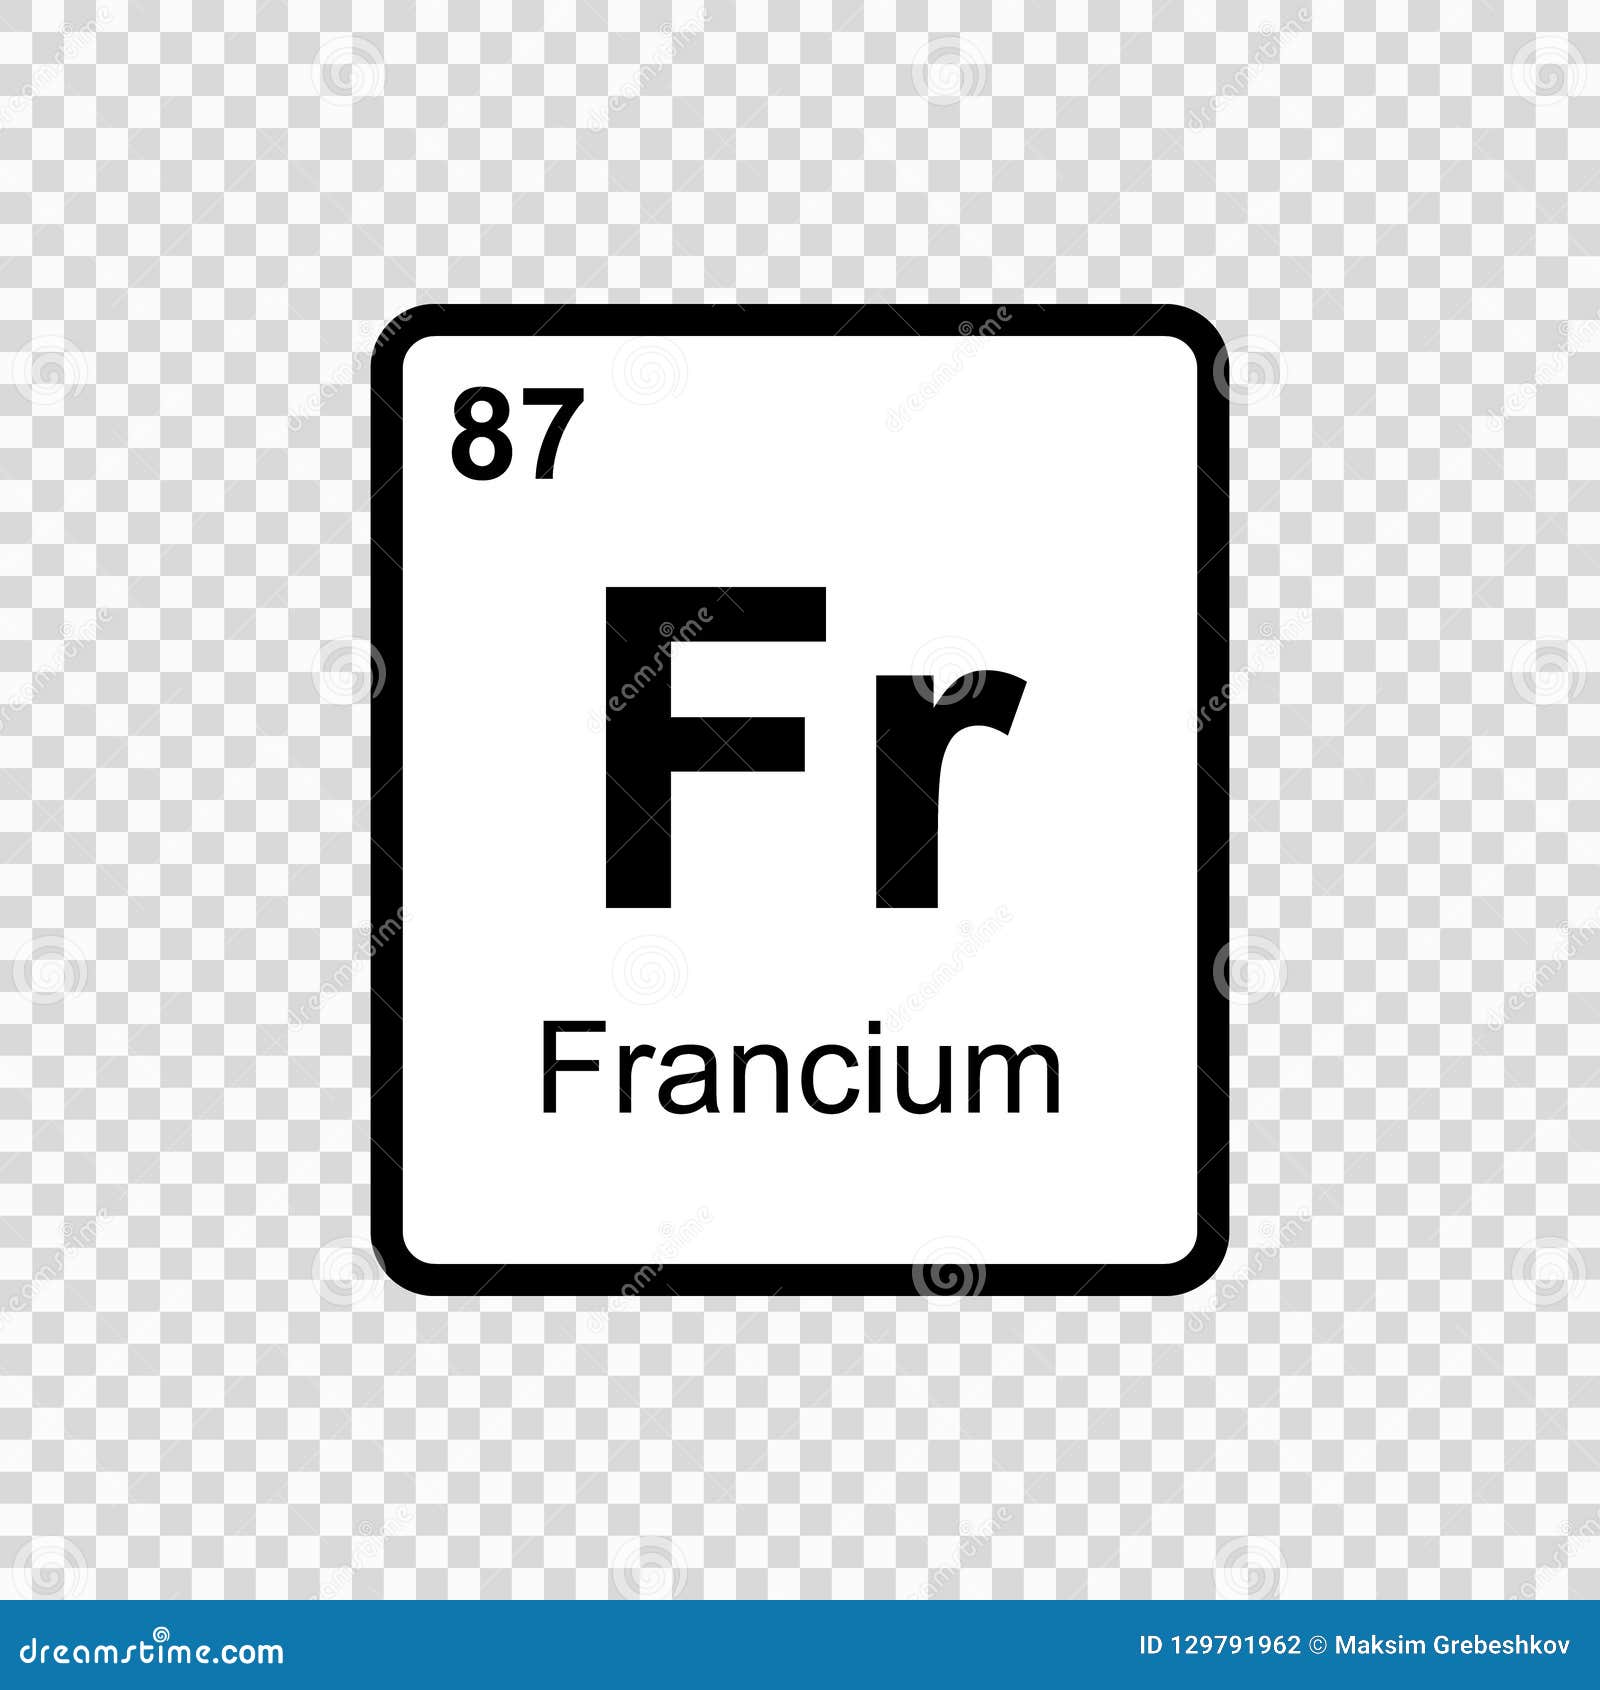 Fr какой элемент. Франций. Франций химический элемент. Франций химический элемент интересные факты. Fr франций.